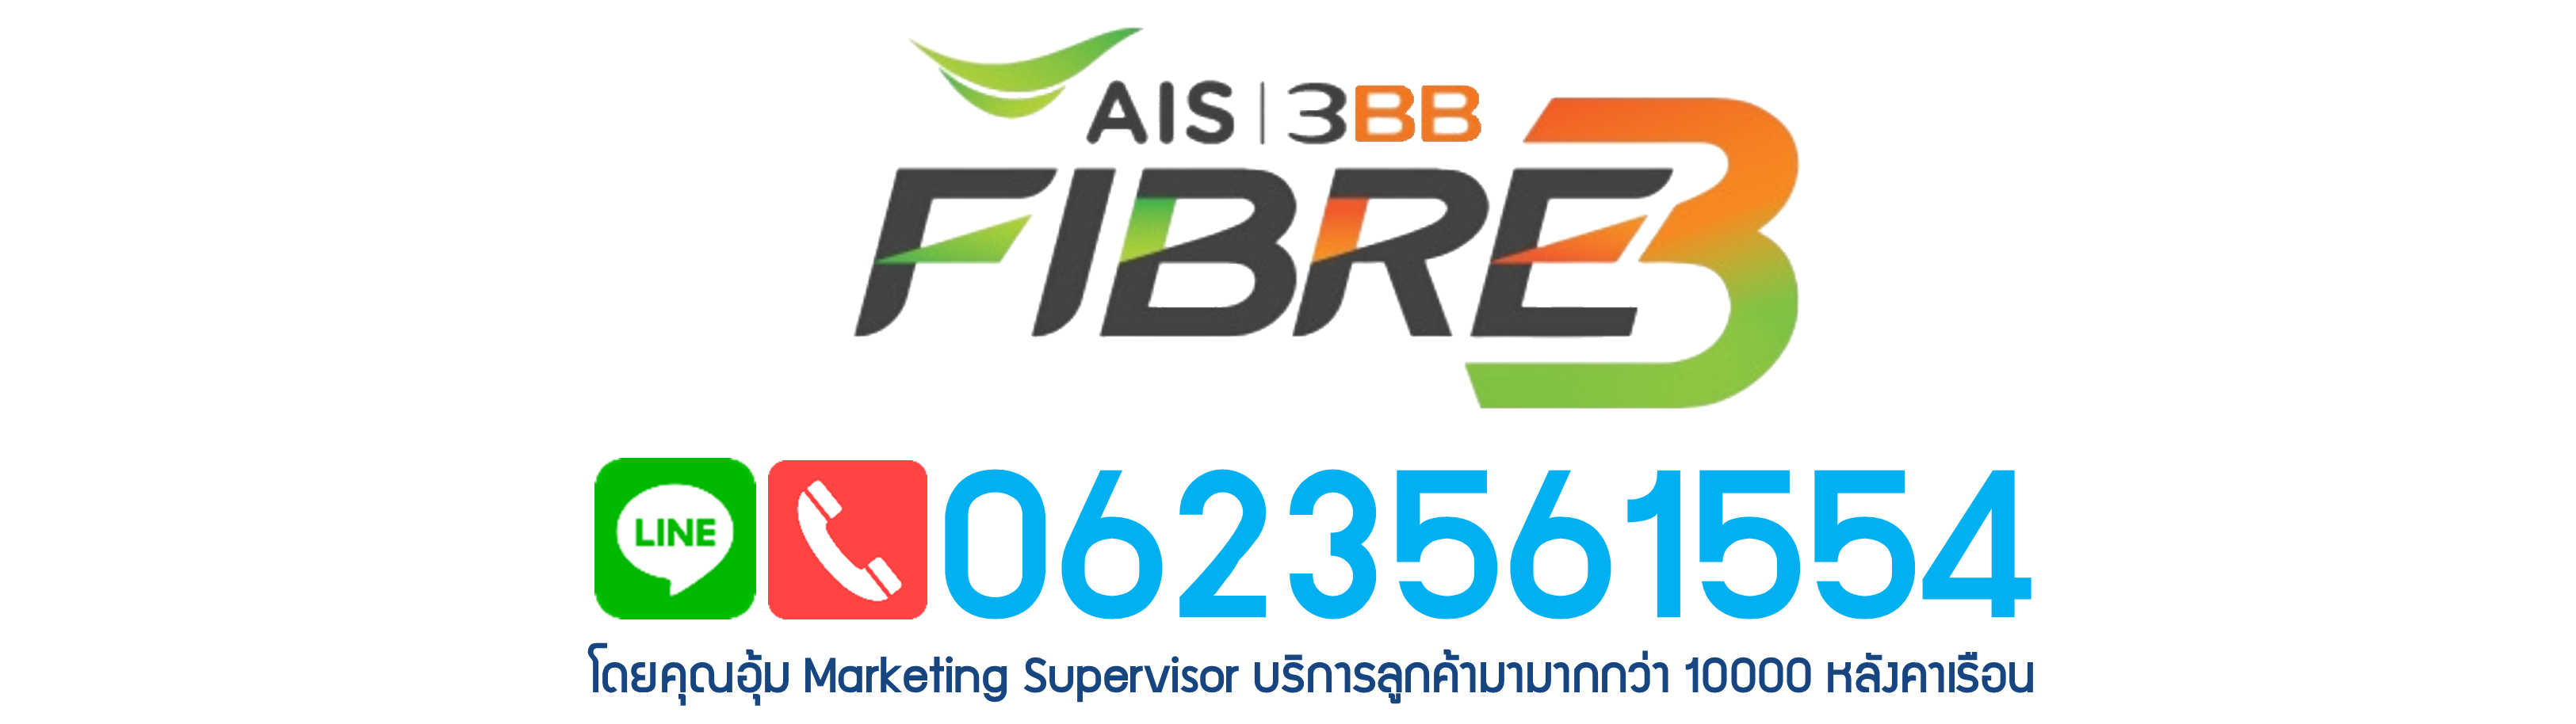 3BB Fiber ติดตั้งฟรีทั่วประเทศ เพียง 590 บาท โทร 0623561554